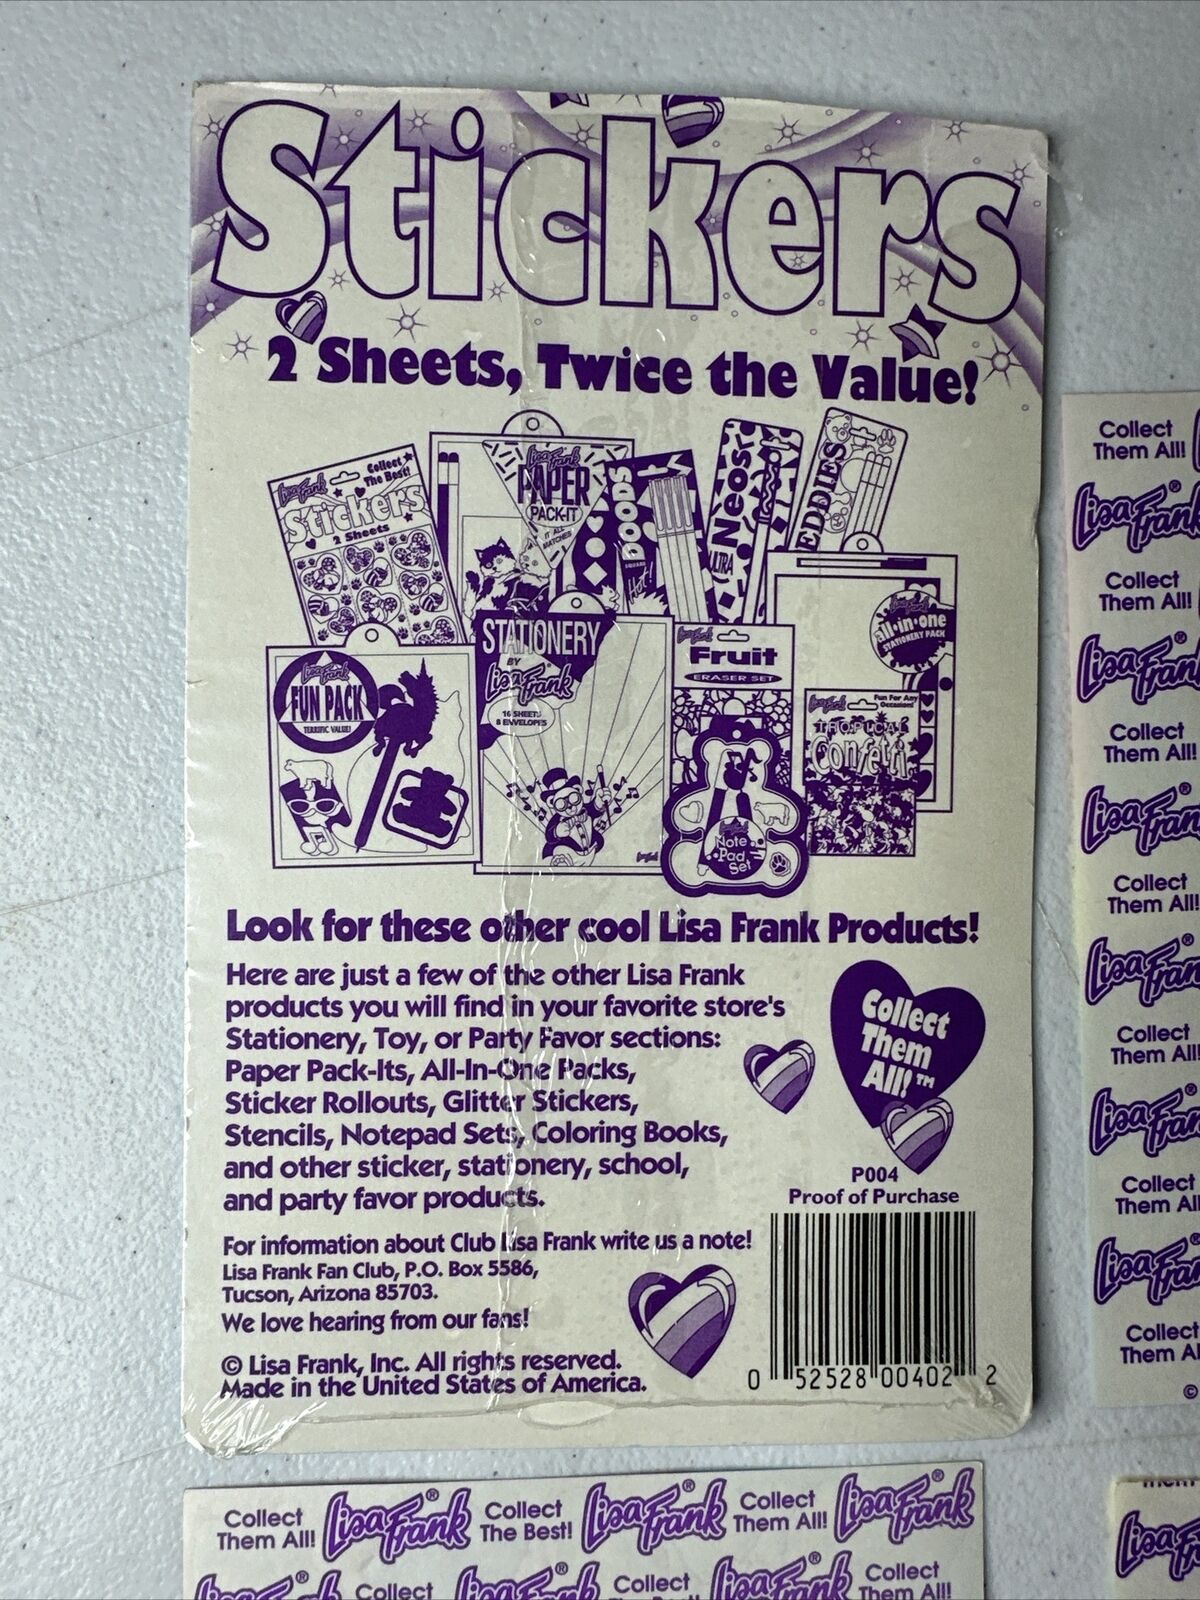 Rare Vintage Lisa Frank Sticker Sheets - 6-Piece Set with Card Back - Collectible 1990s Nostalgia - TreasuTiques